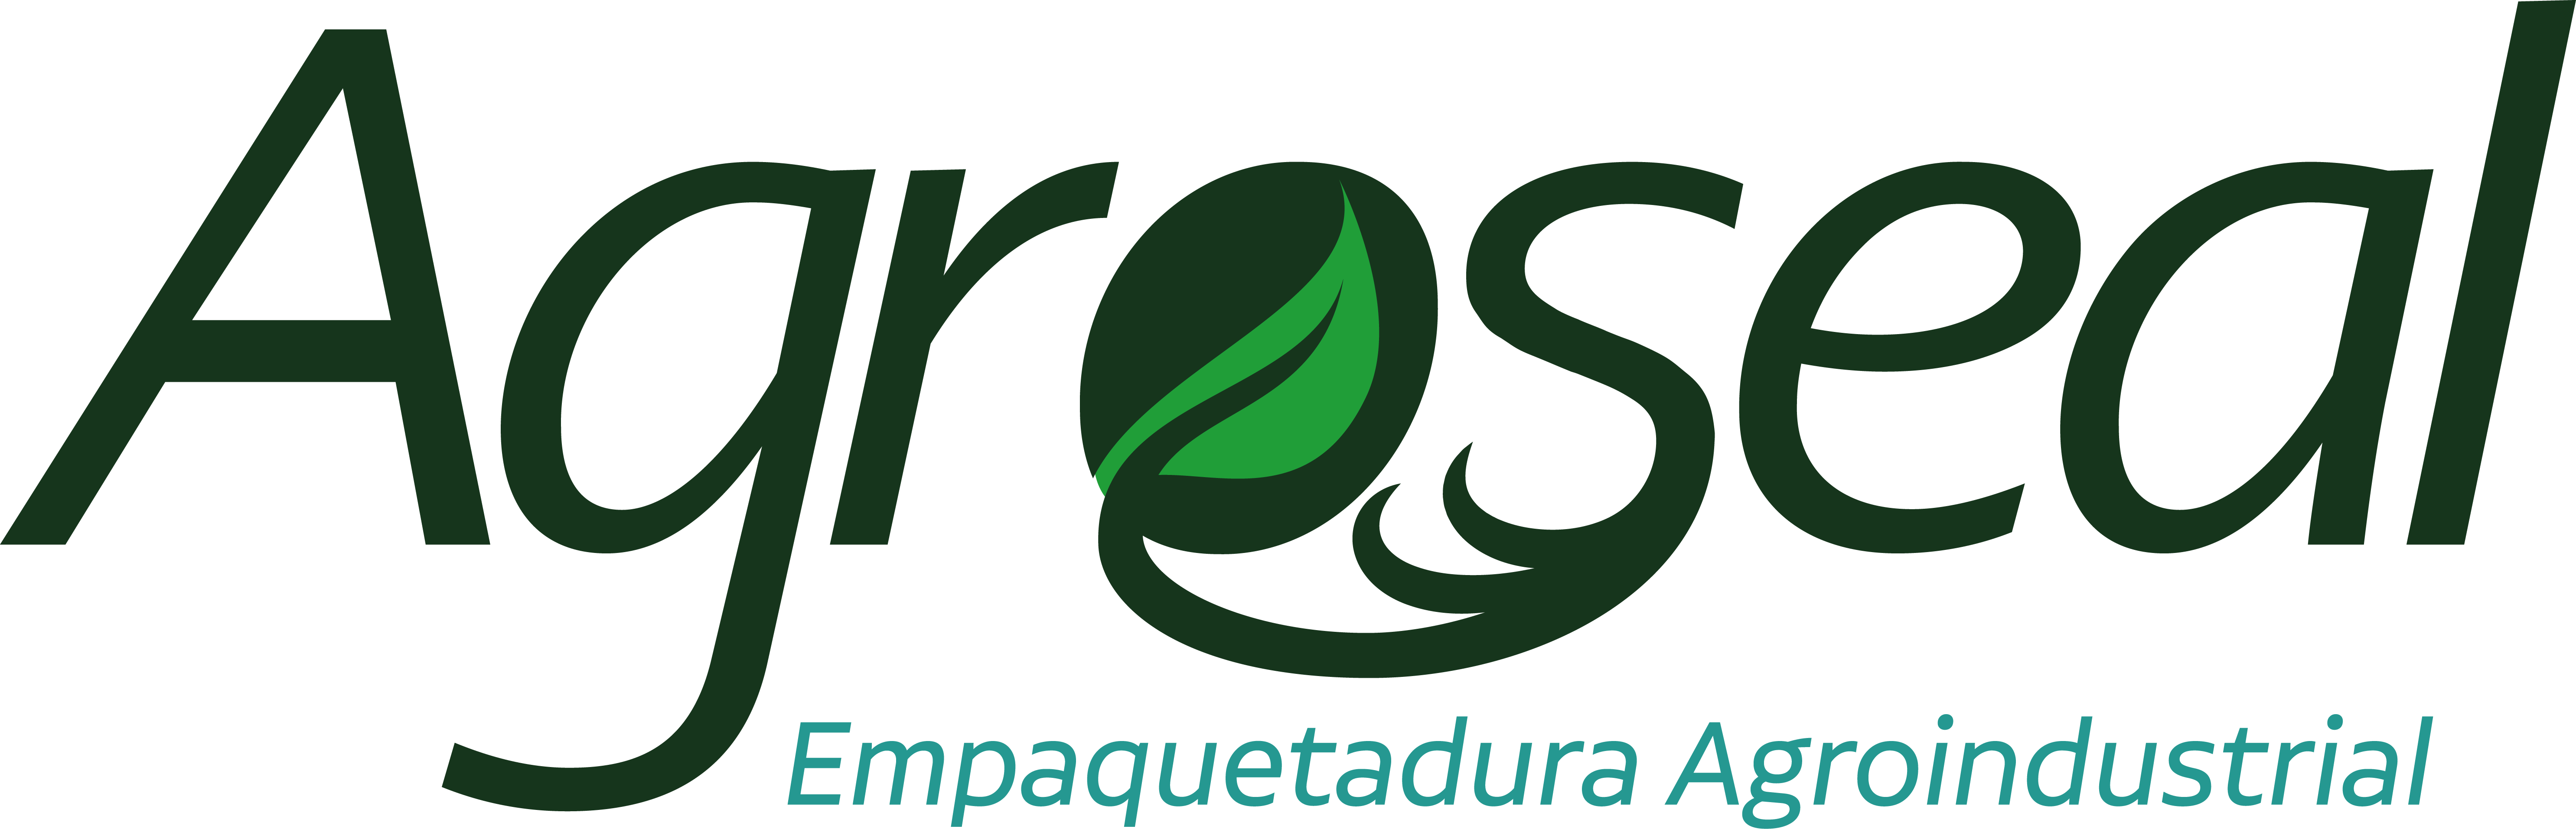 Logo Agroseal